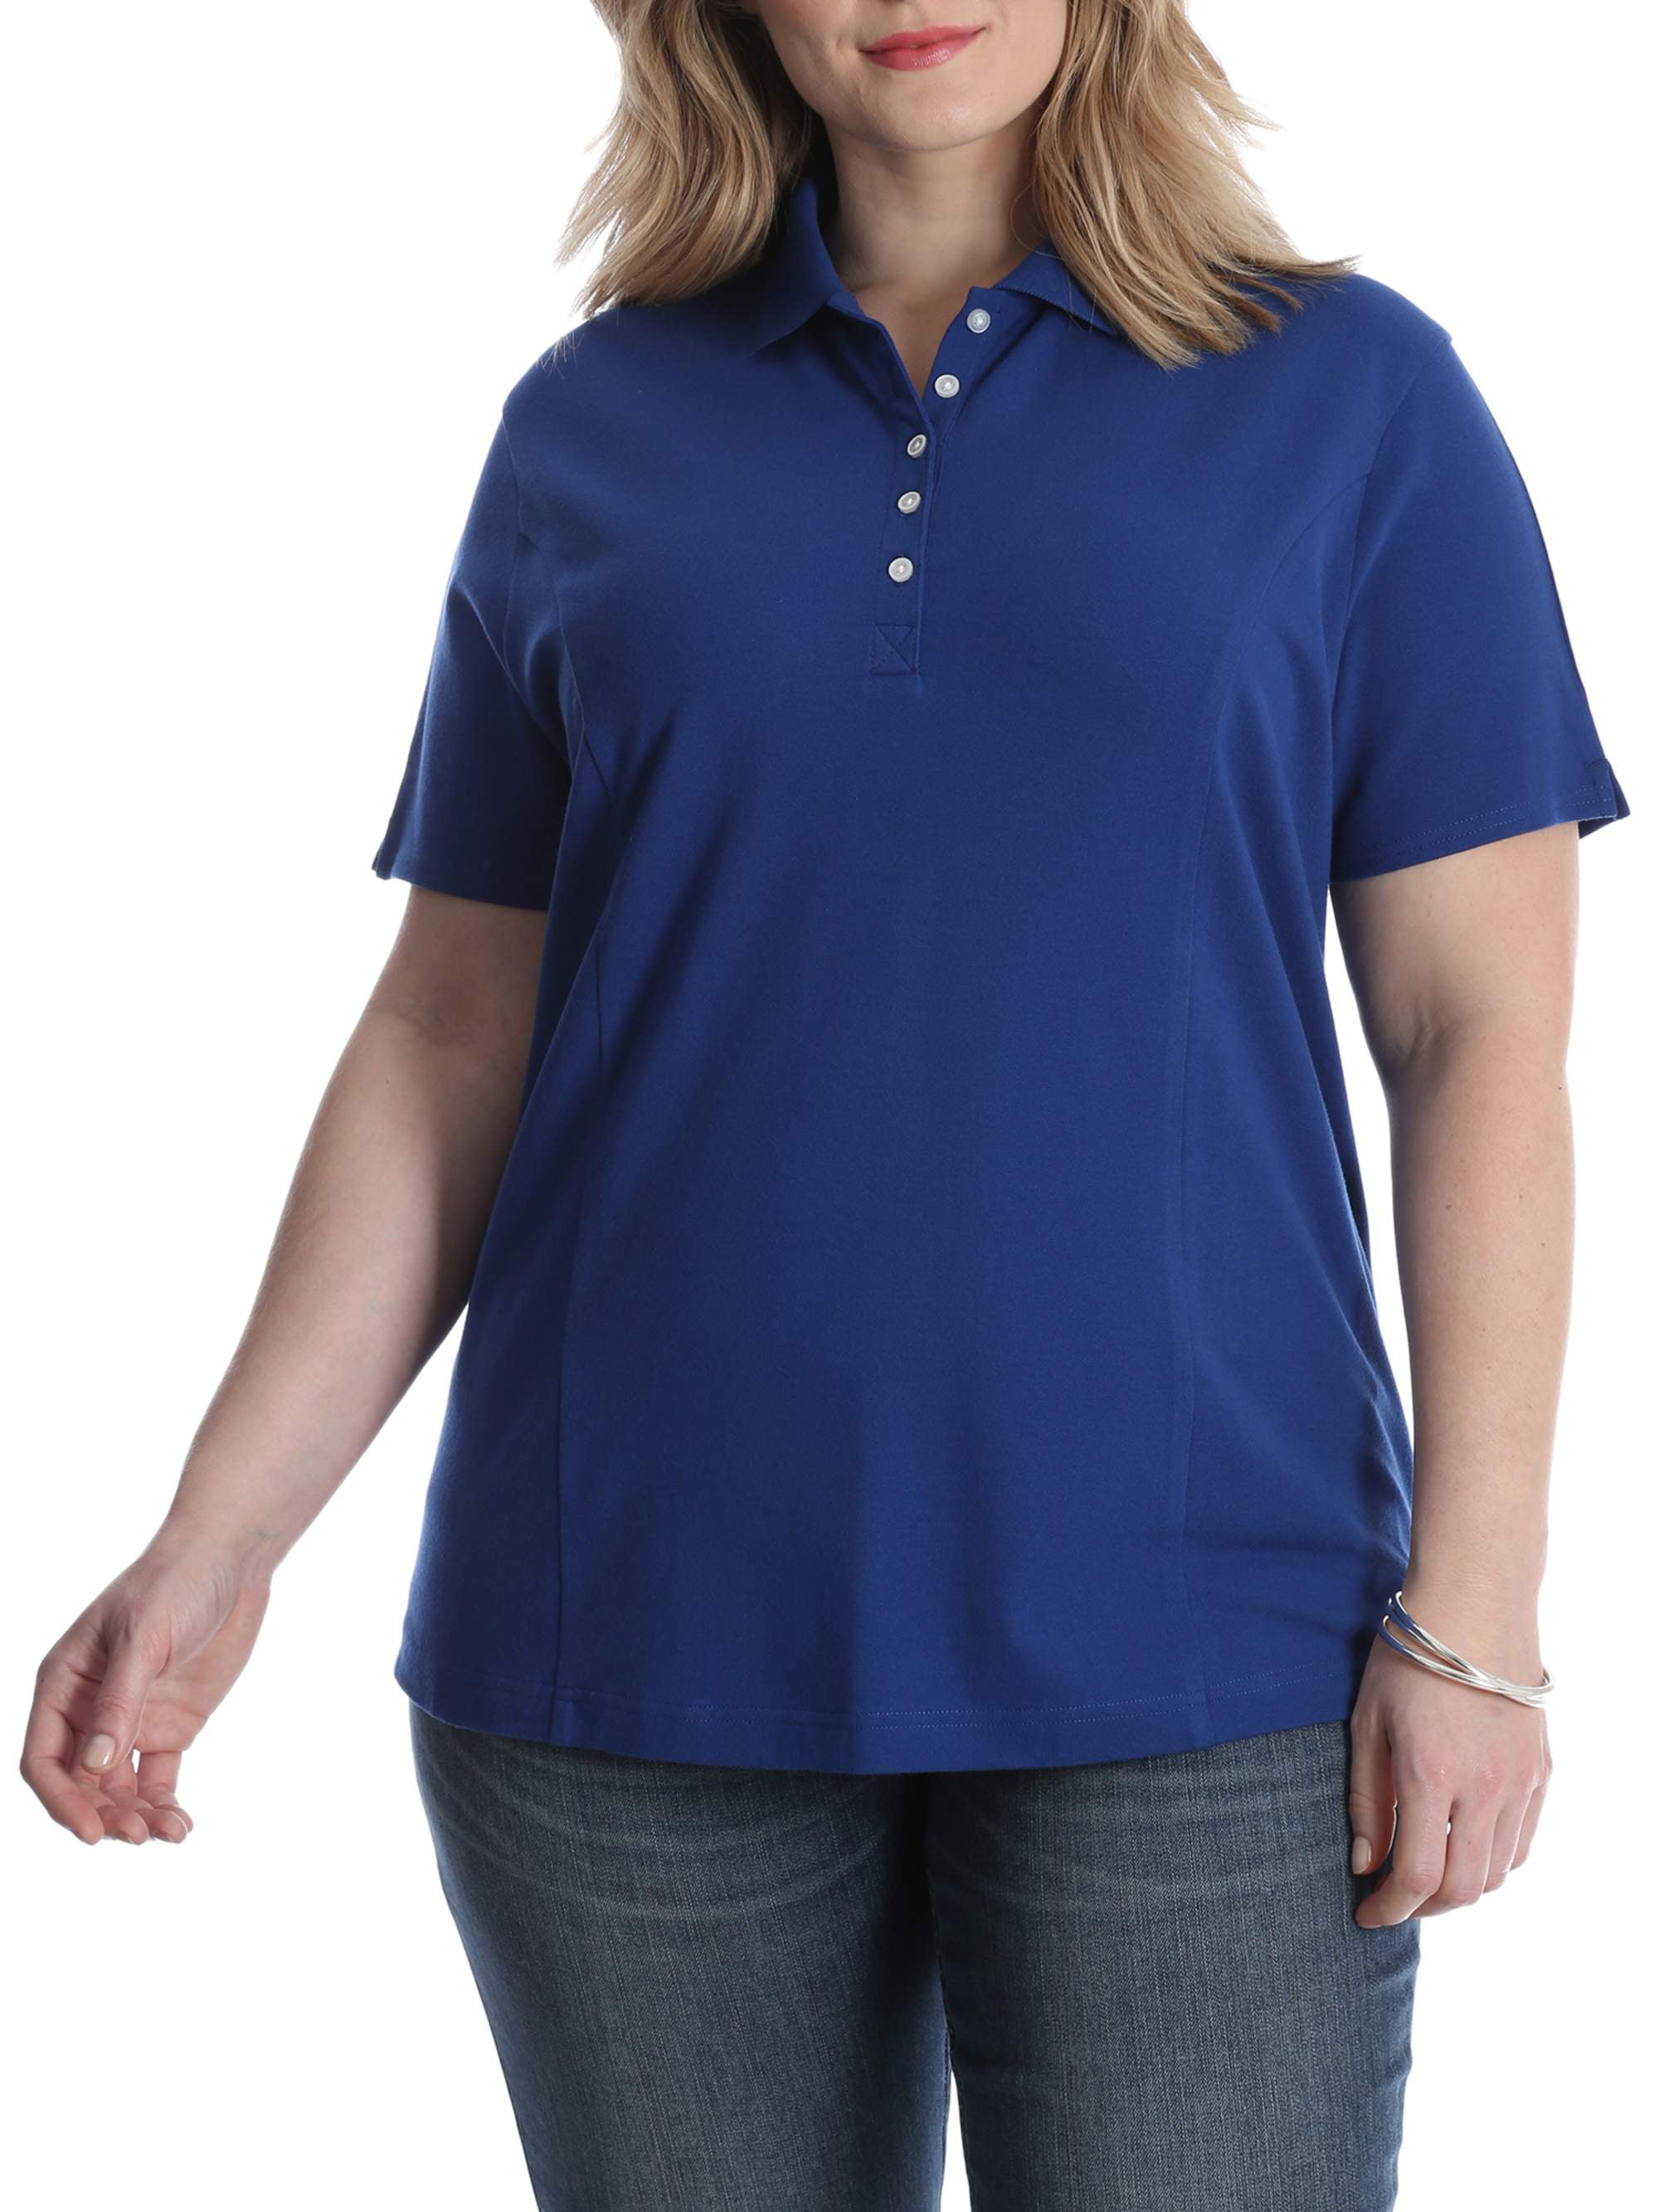 Lee Riders Women's Short Sleeve Knit Essential Polo Shirt - Walmart.com